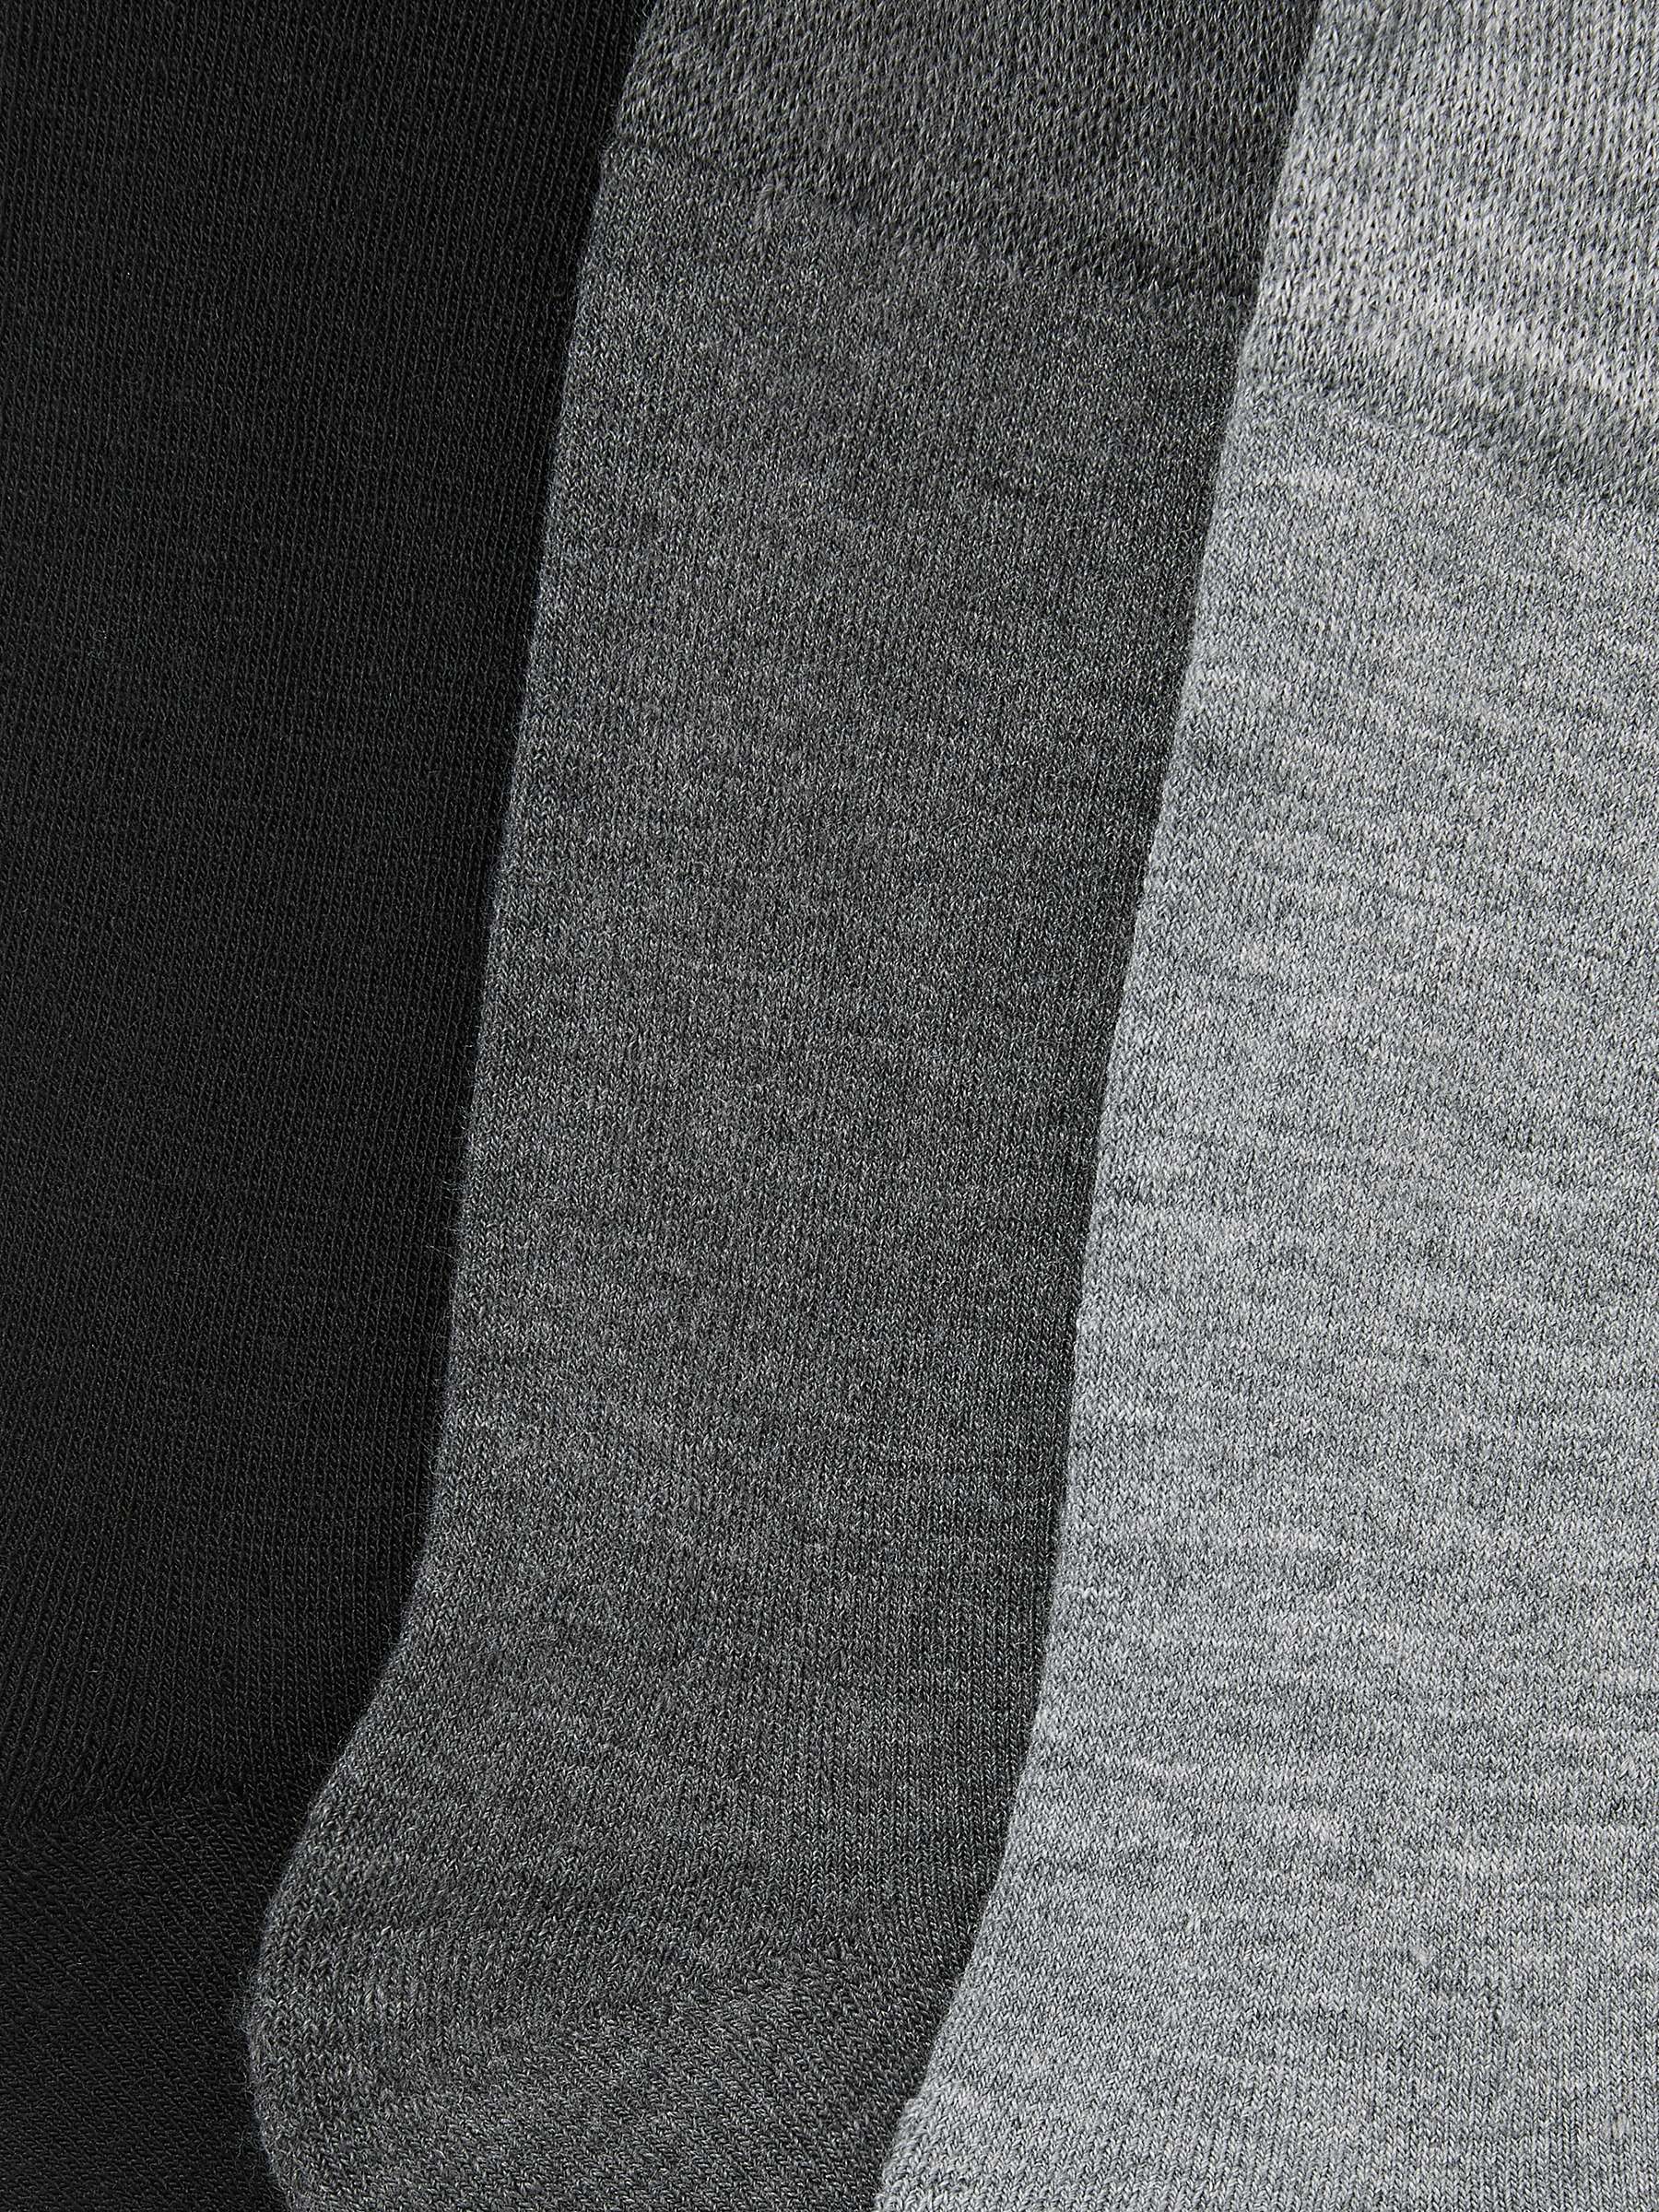 Buy John Lewis Thermal Wool Blend Socks, Pack of 3, One Size, Black/Charcoal/Grey Online at johnlewis.com